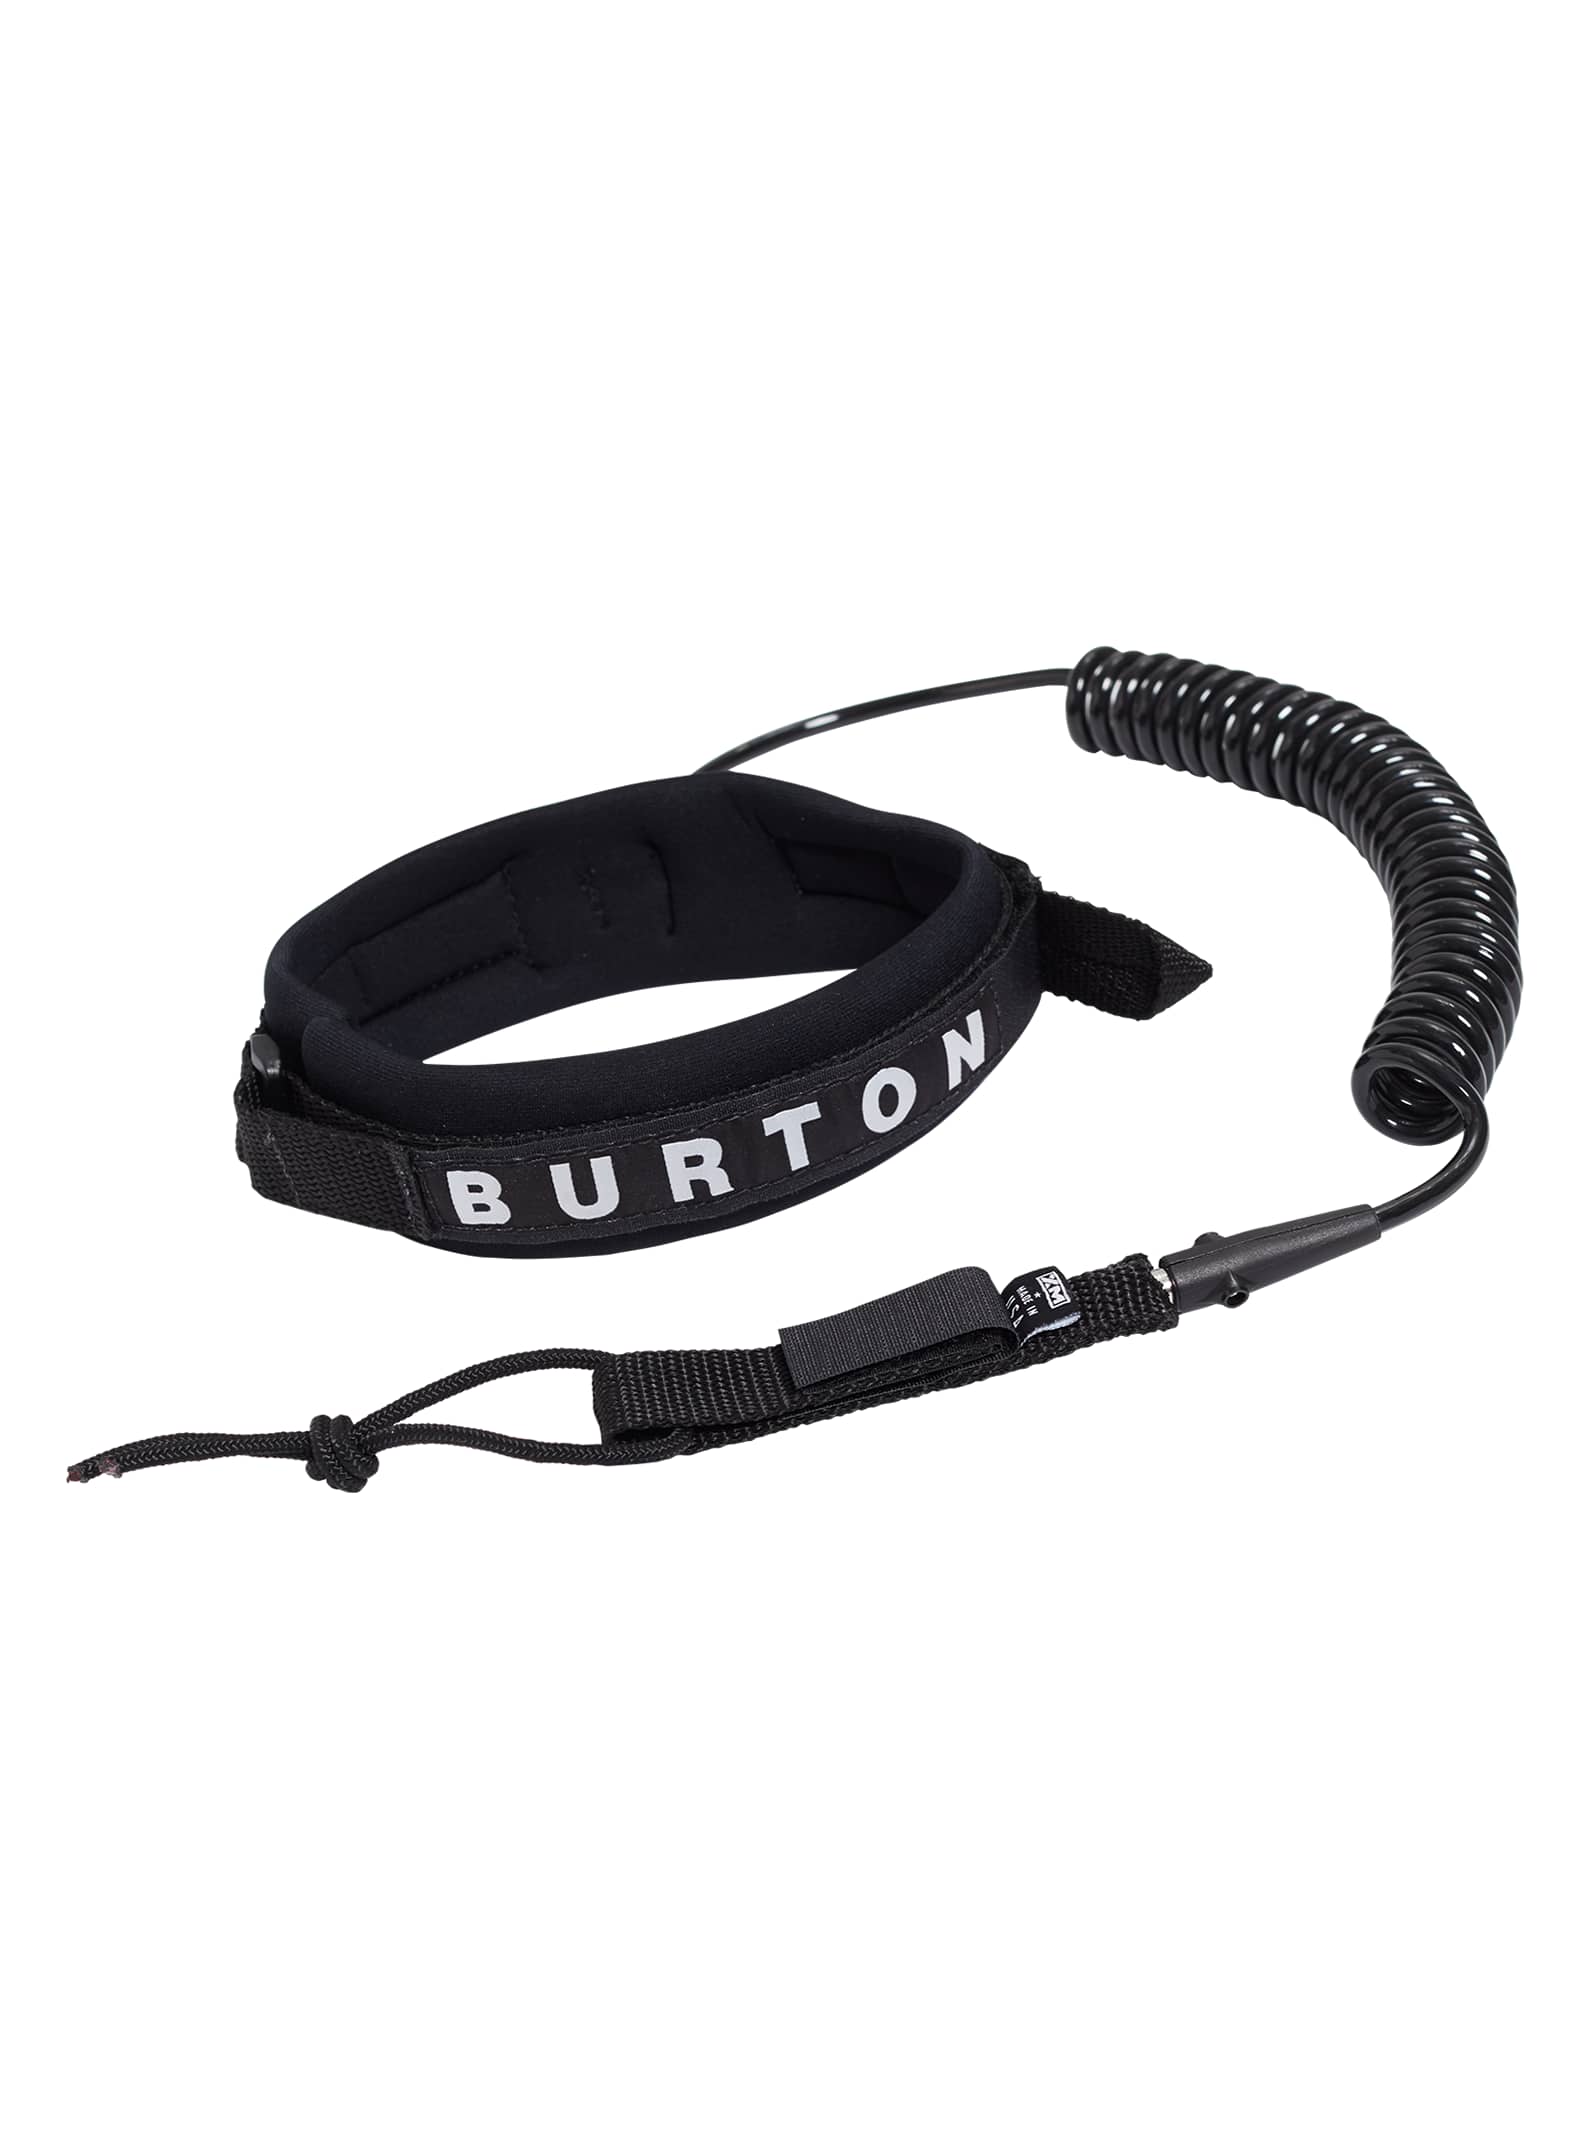 Burton XM Powsurf leash, Black, 1SZ